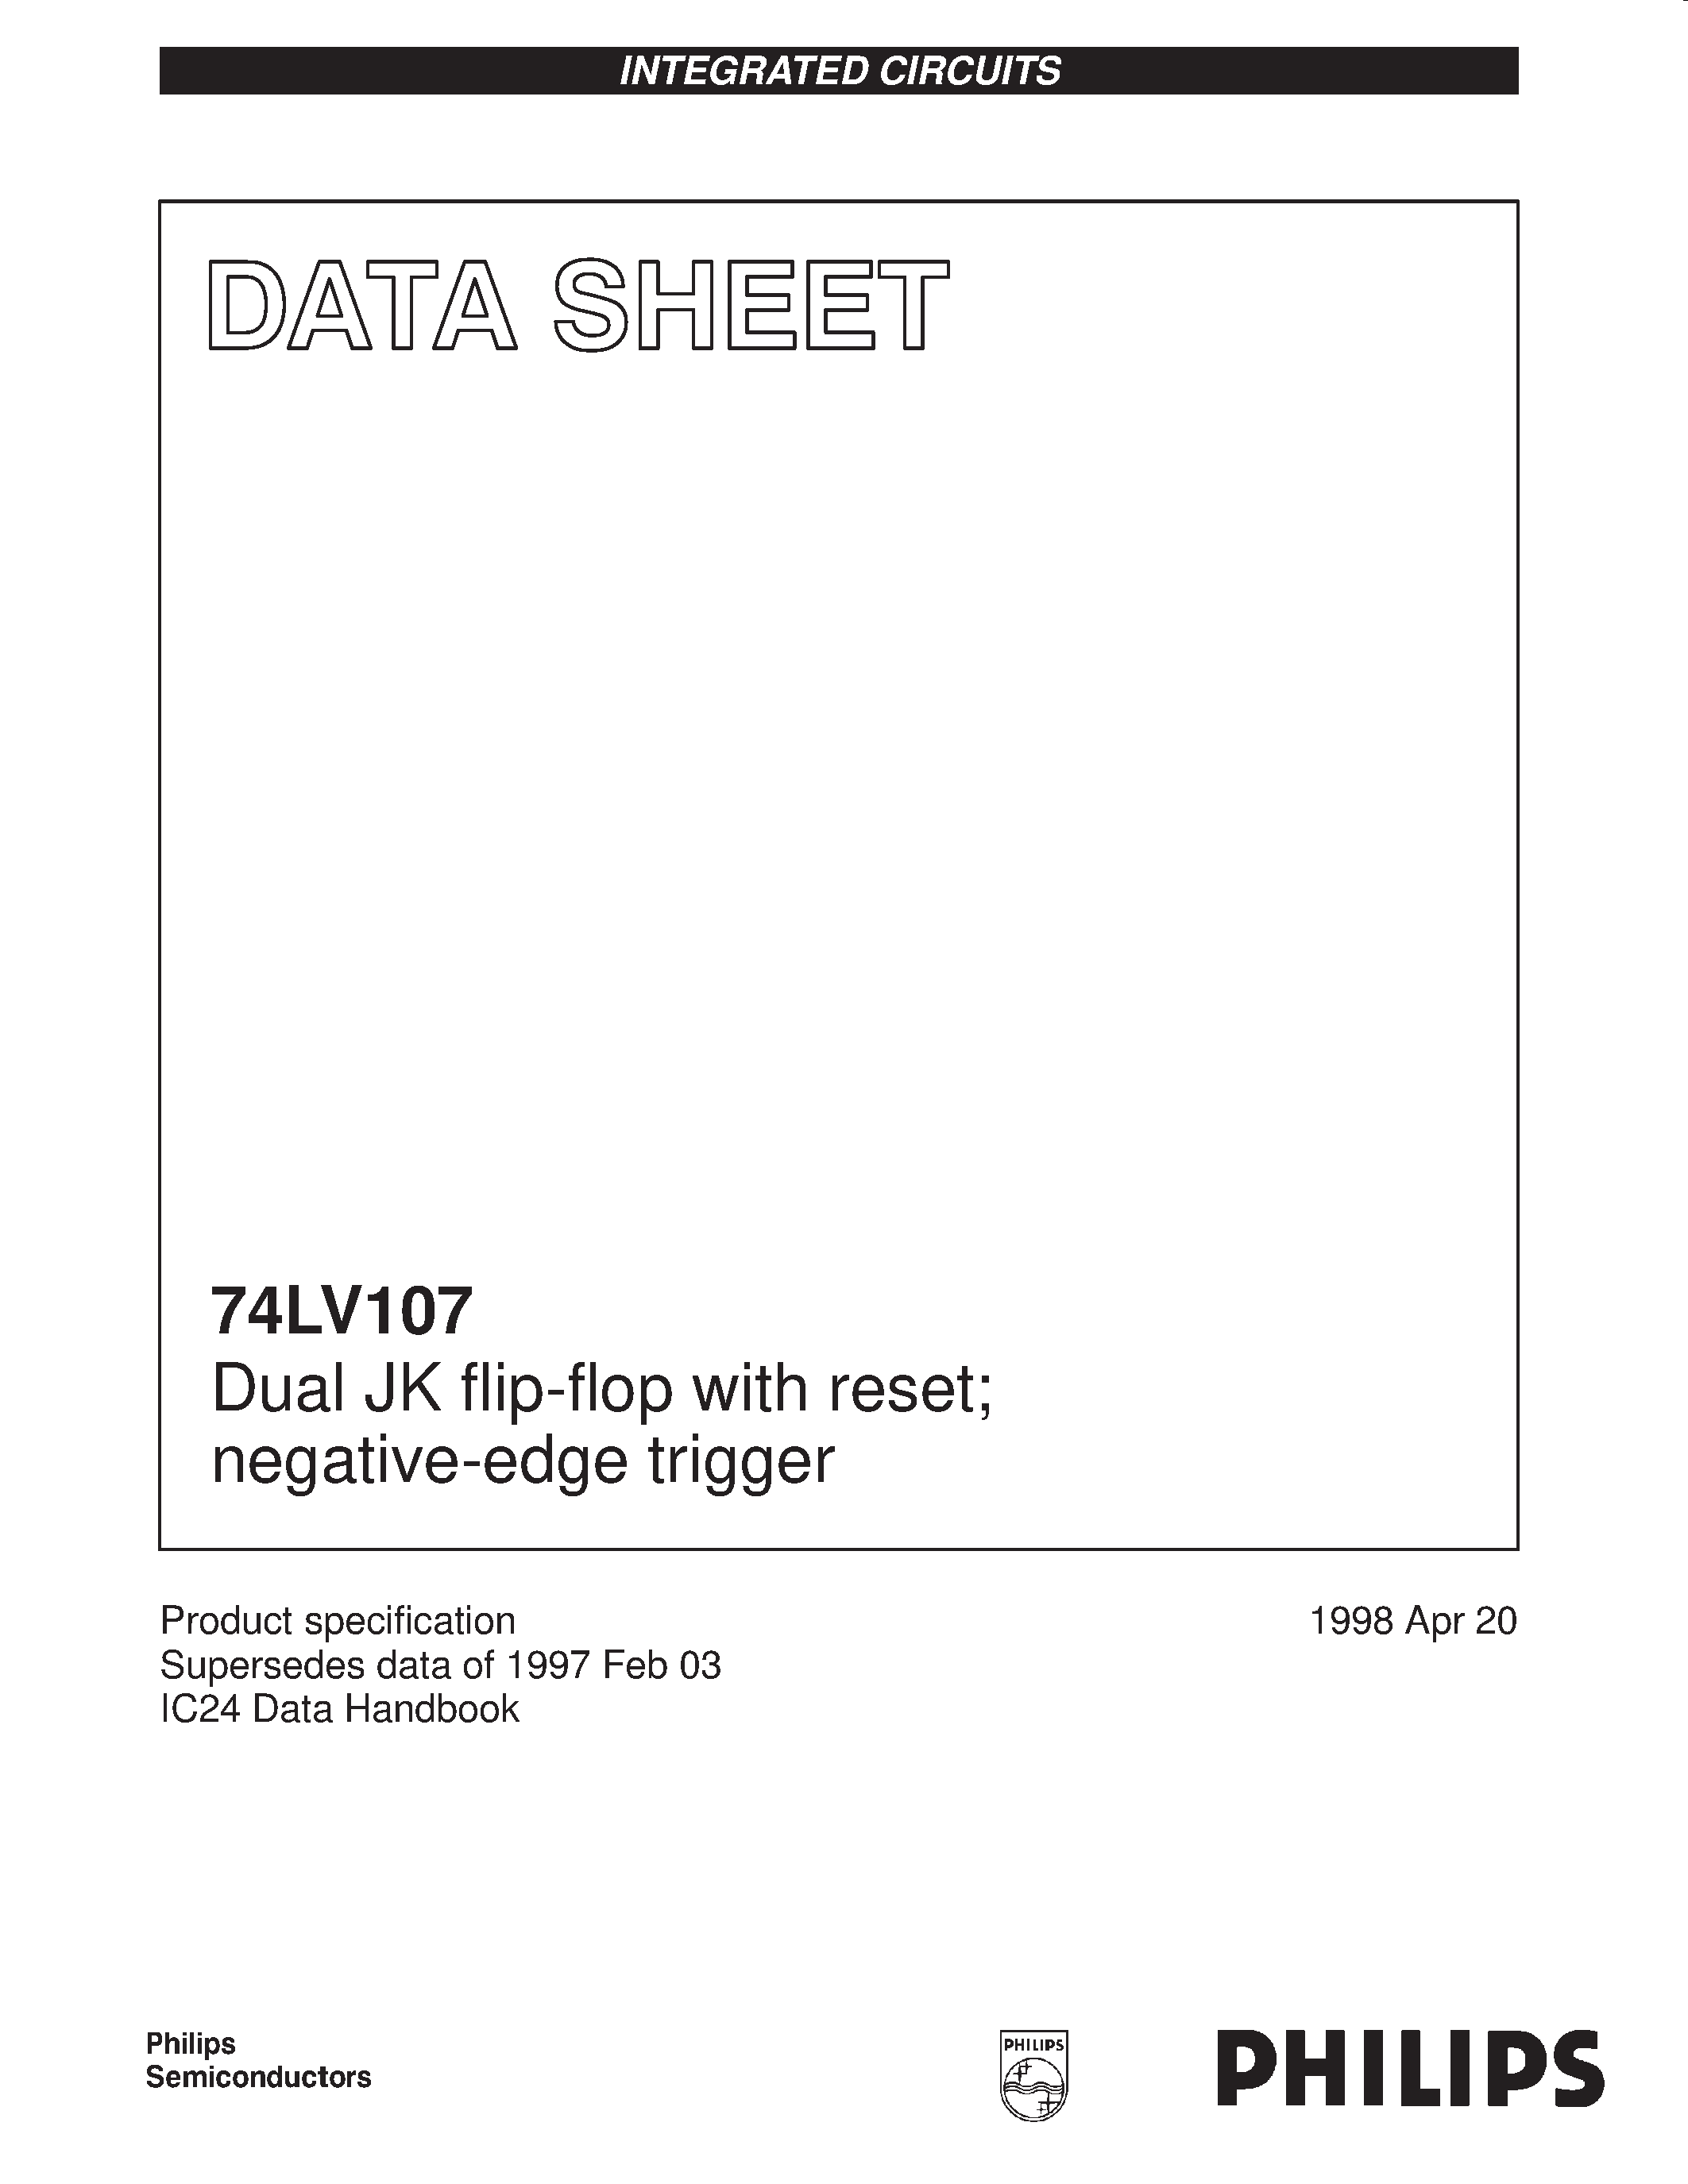 Даташит 74LV107 - Dual JK flip-flop with reset; negative-edge trigger страница 1